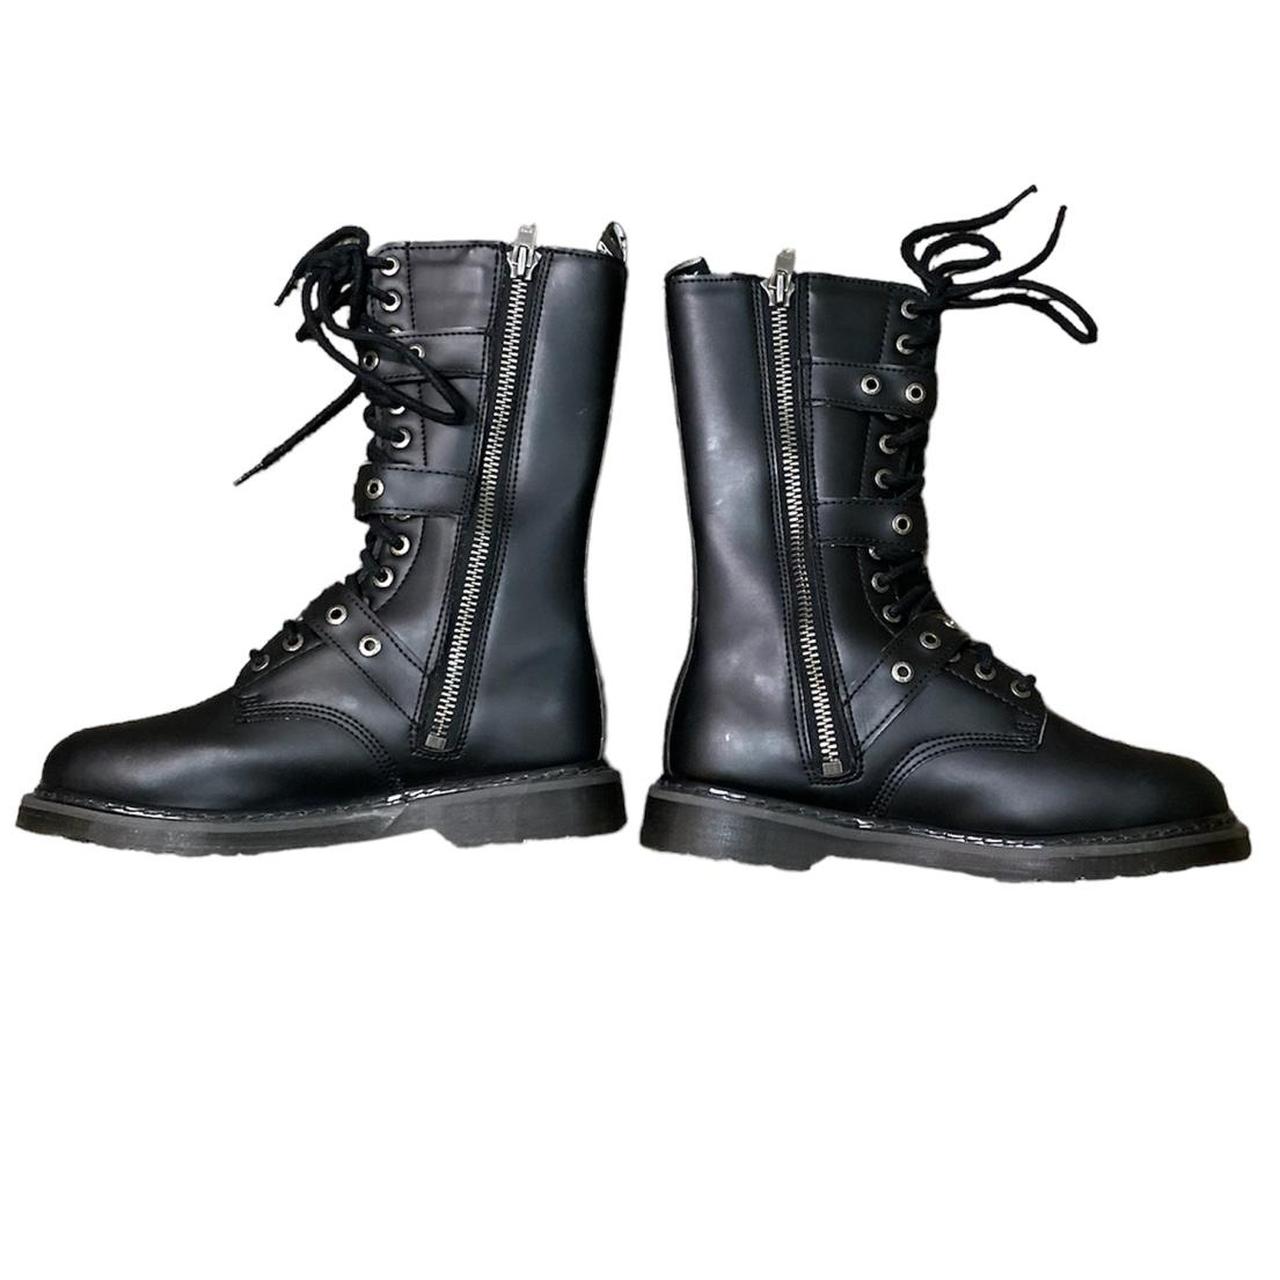 Demonia Men's Black and Grey Boots (2)